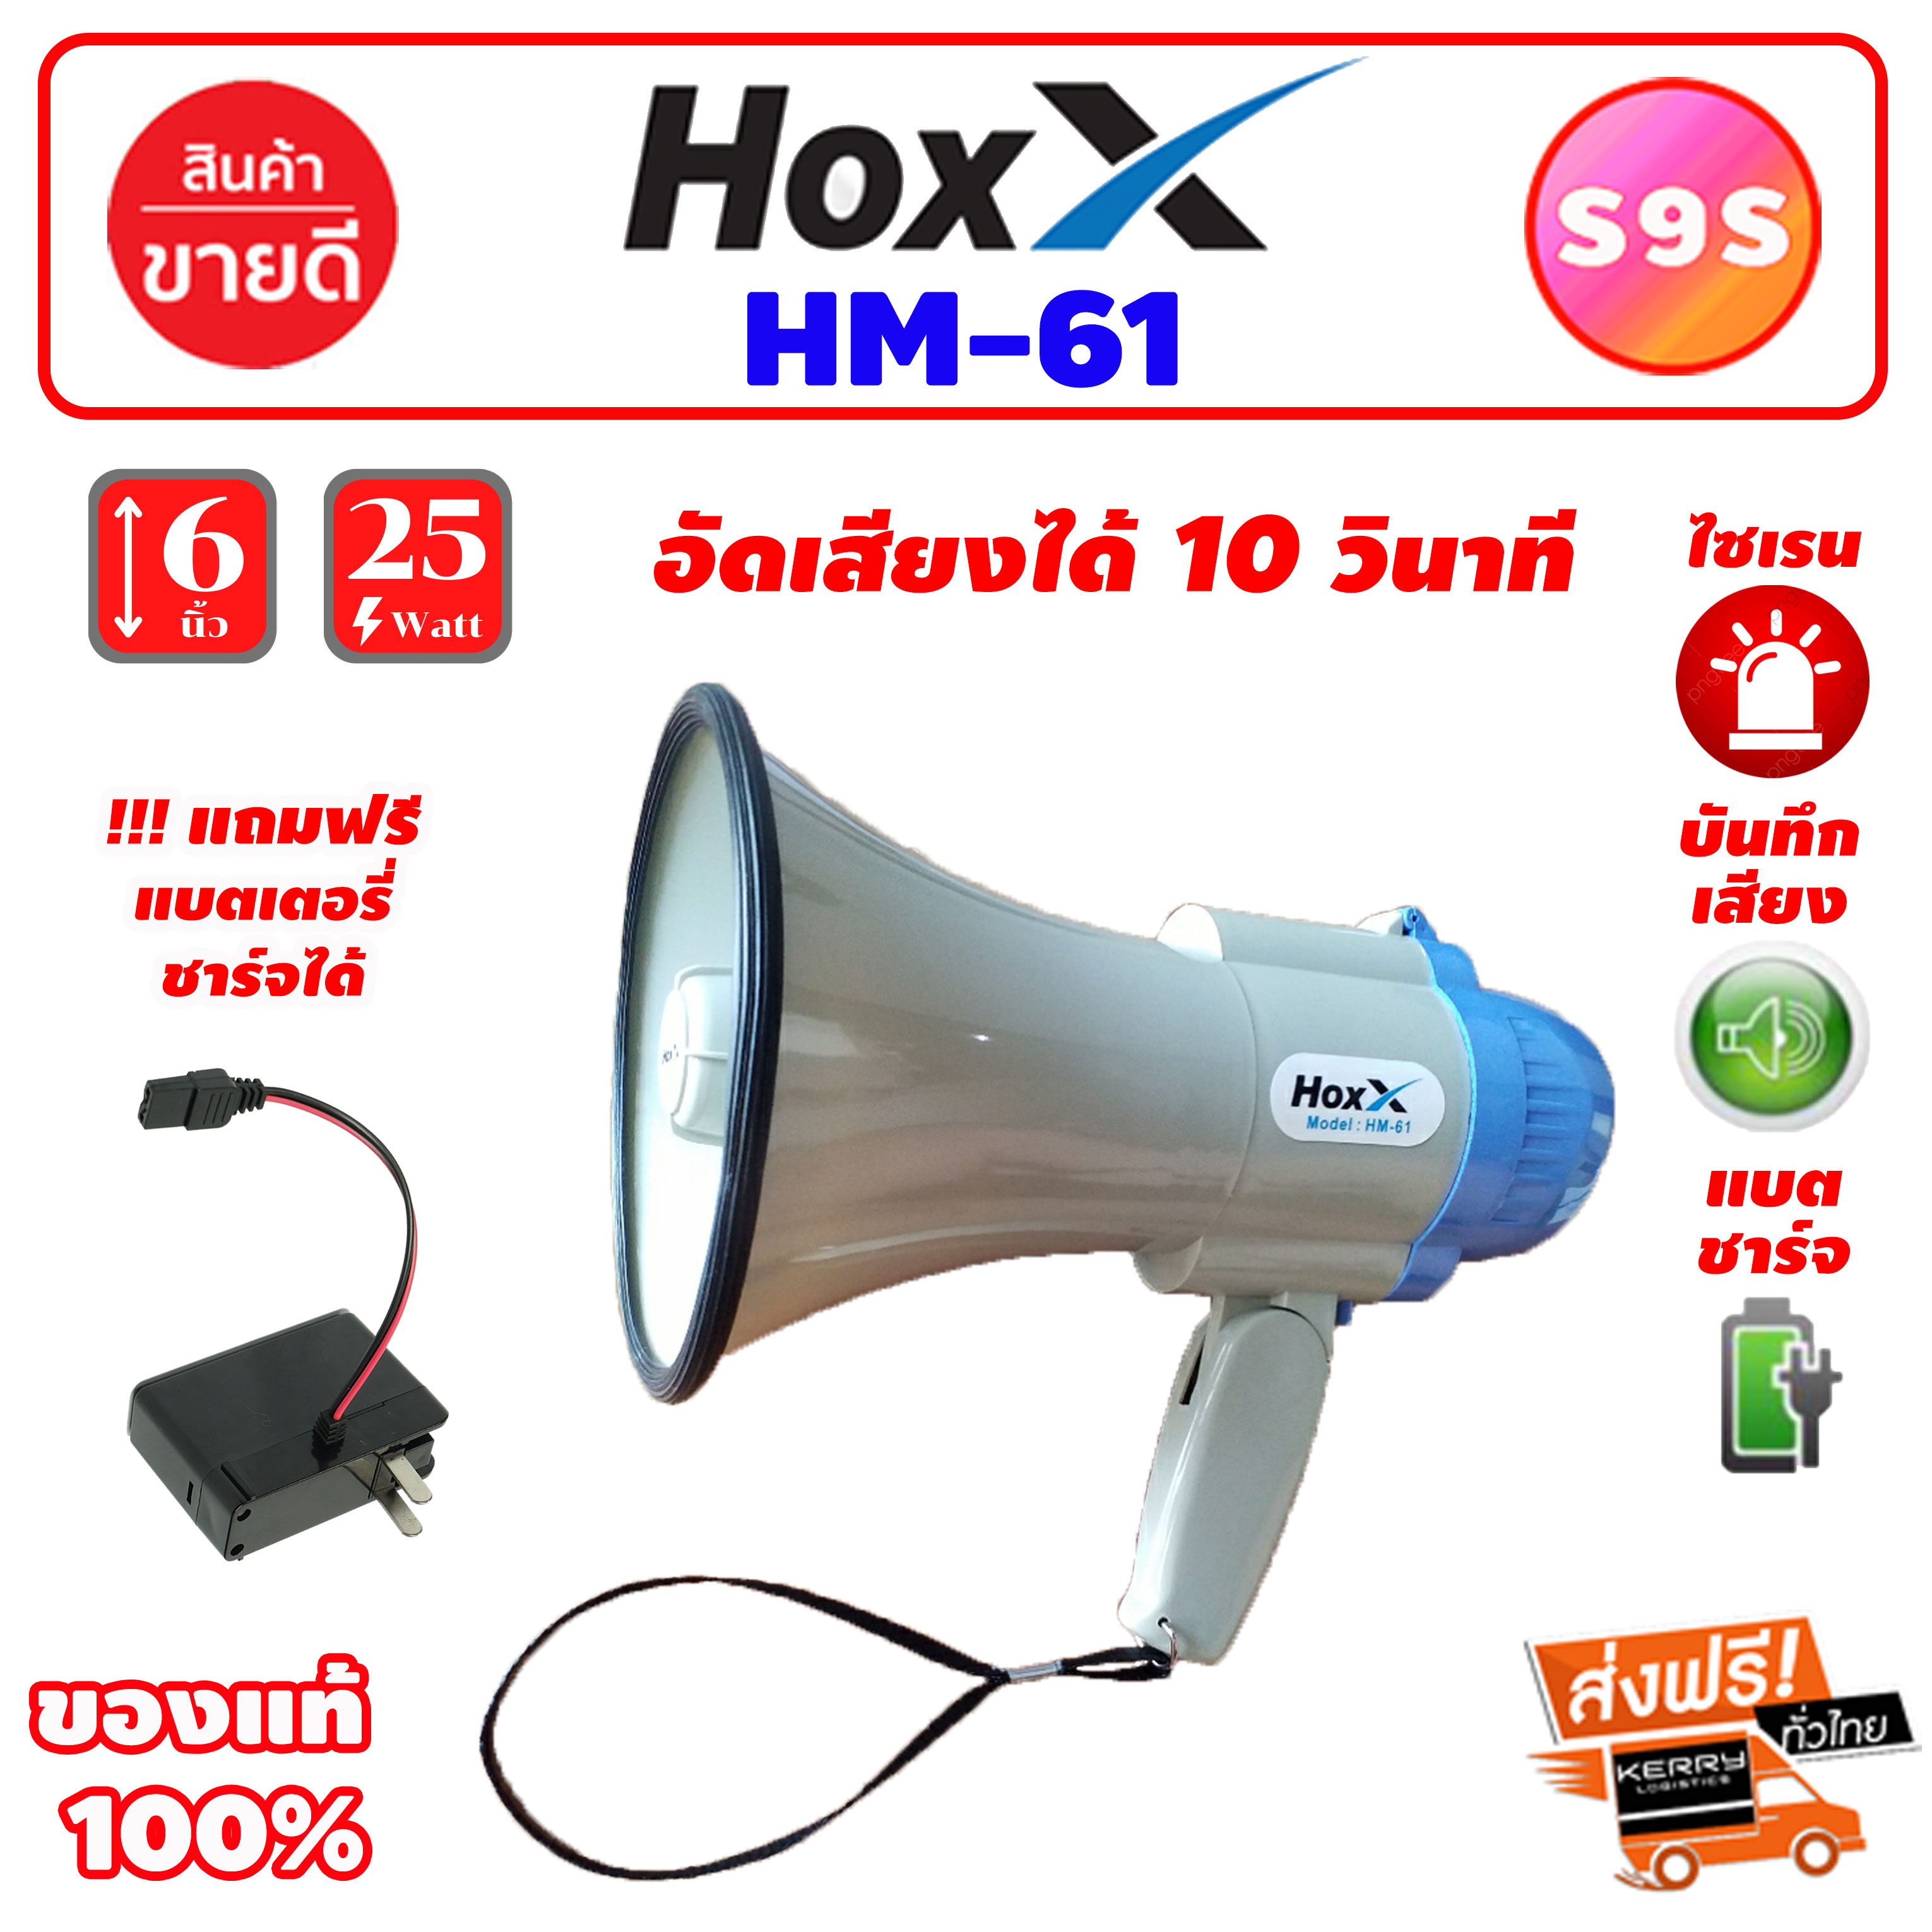 HOXX HM-61 โทรโข่ง Megaphone ขนาด 6 นิ้ว 30 วัตต์ USB / SD Card โทรโข่งอัดเสียงได้ 10 วินาที มีแบตเตอรี่ ชาร์จได้ โทรโข่งเล็ก deccon โทรโข่งขายของ โทรโข่งพกพา โทรโข่ง ราคาถูก ลำโพงโทรโข่ง ทอระโข่ง ทอละโข่ง